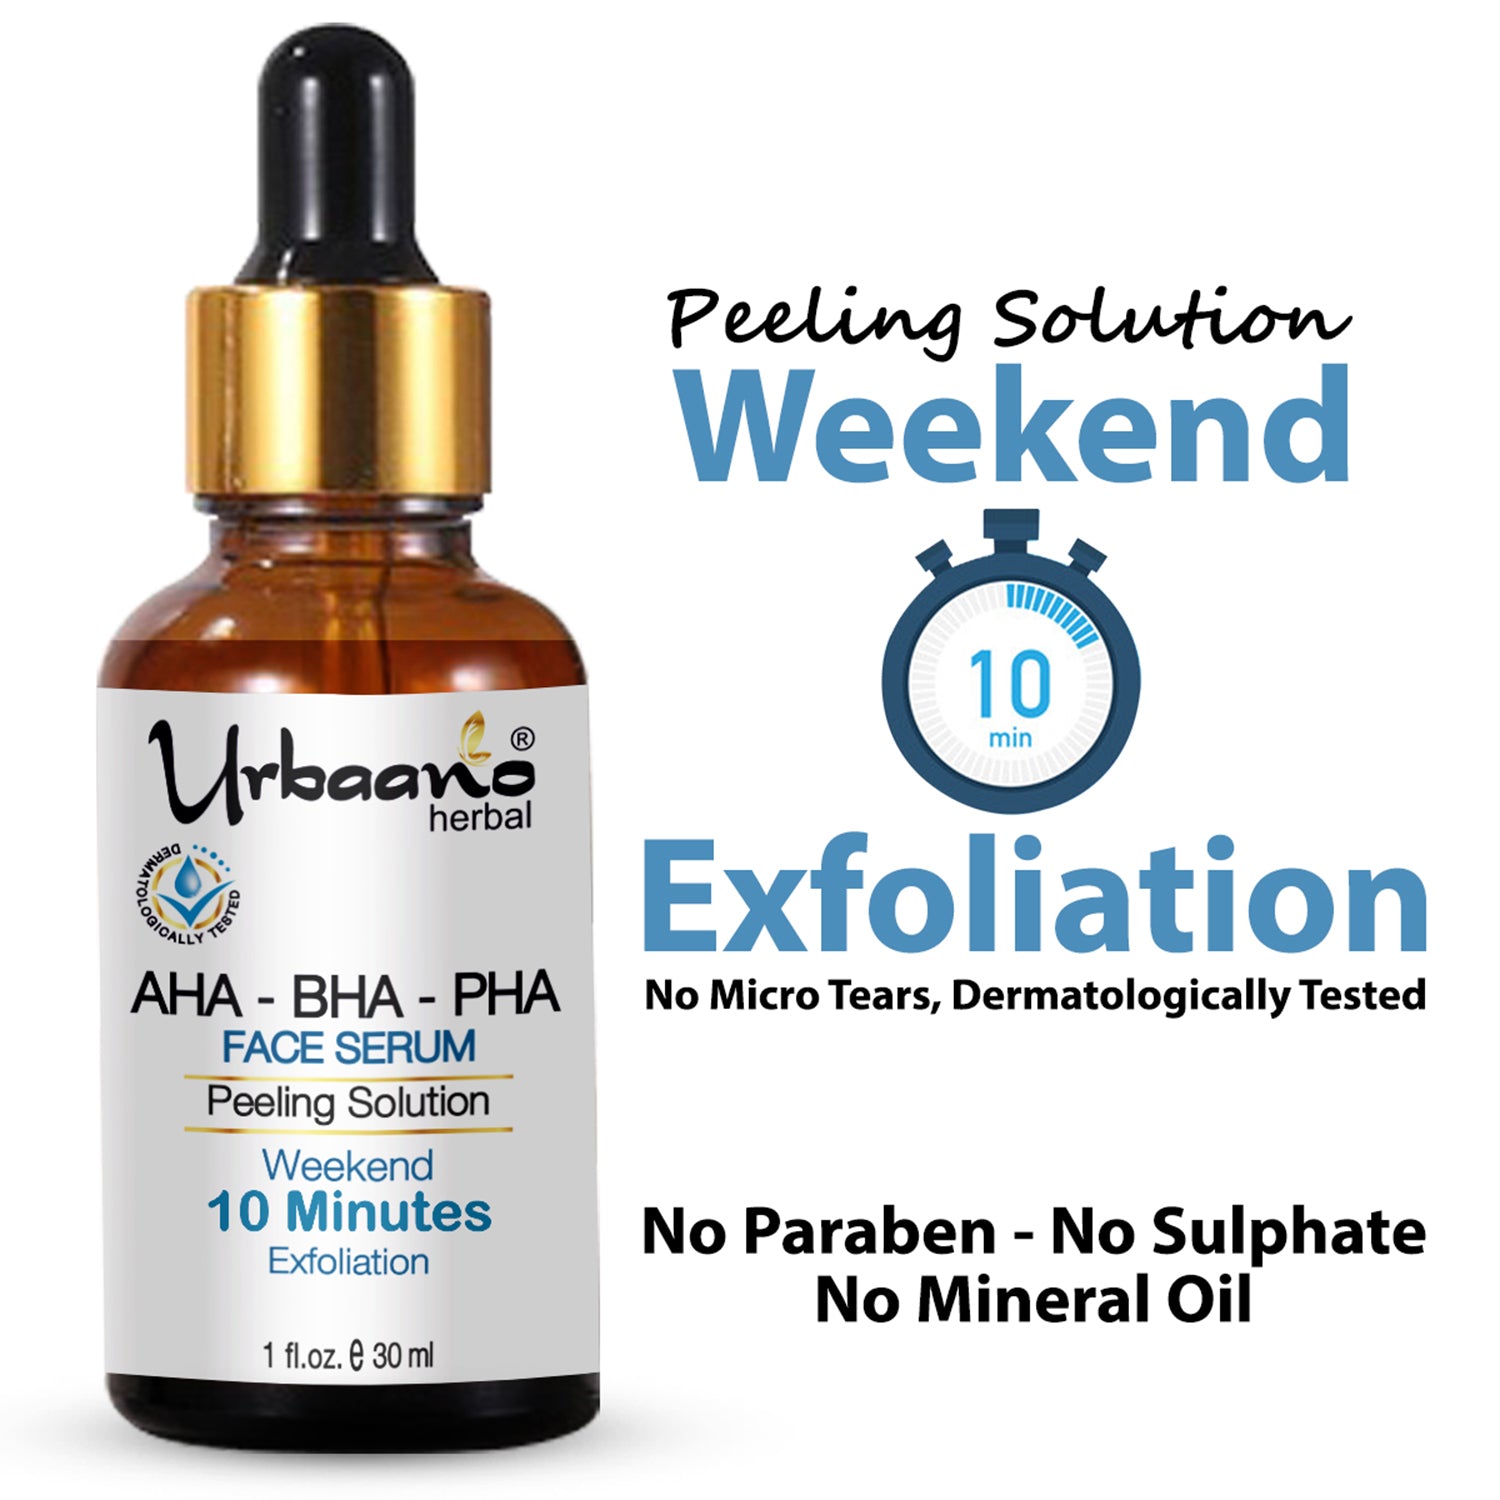 urbaano herbal aha bha pha glow face peeling serum gel for hydrated smooth skin